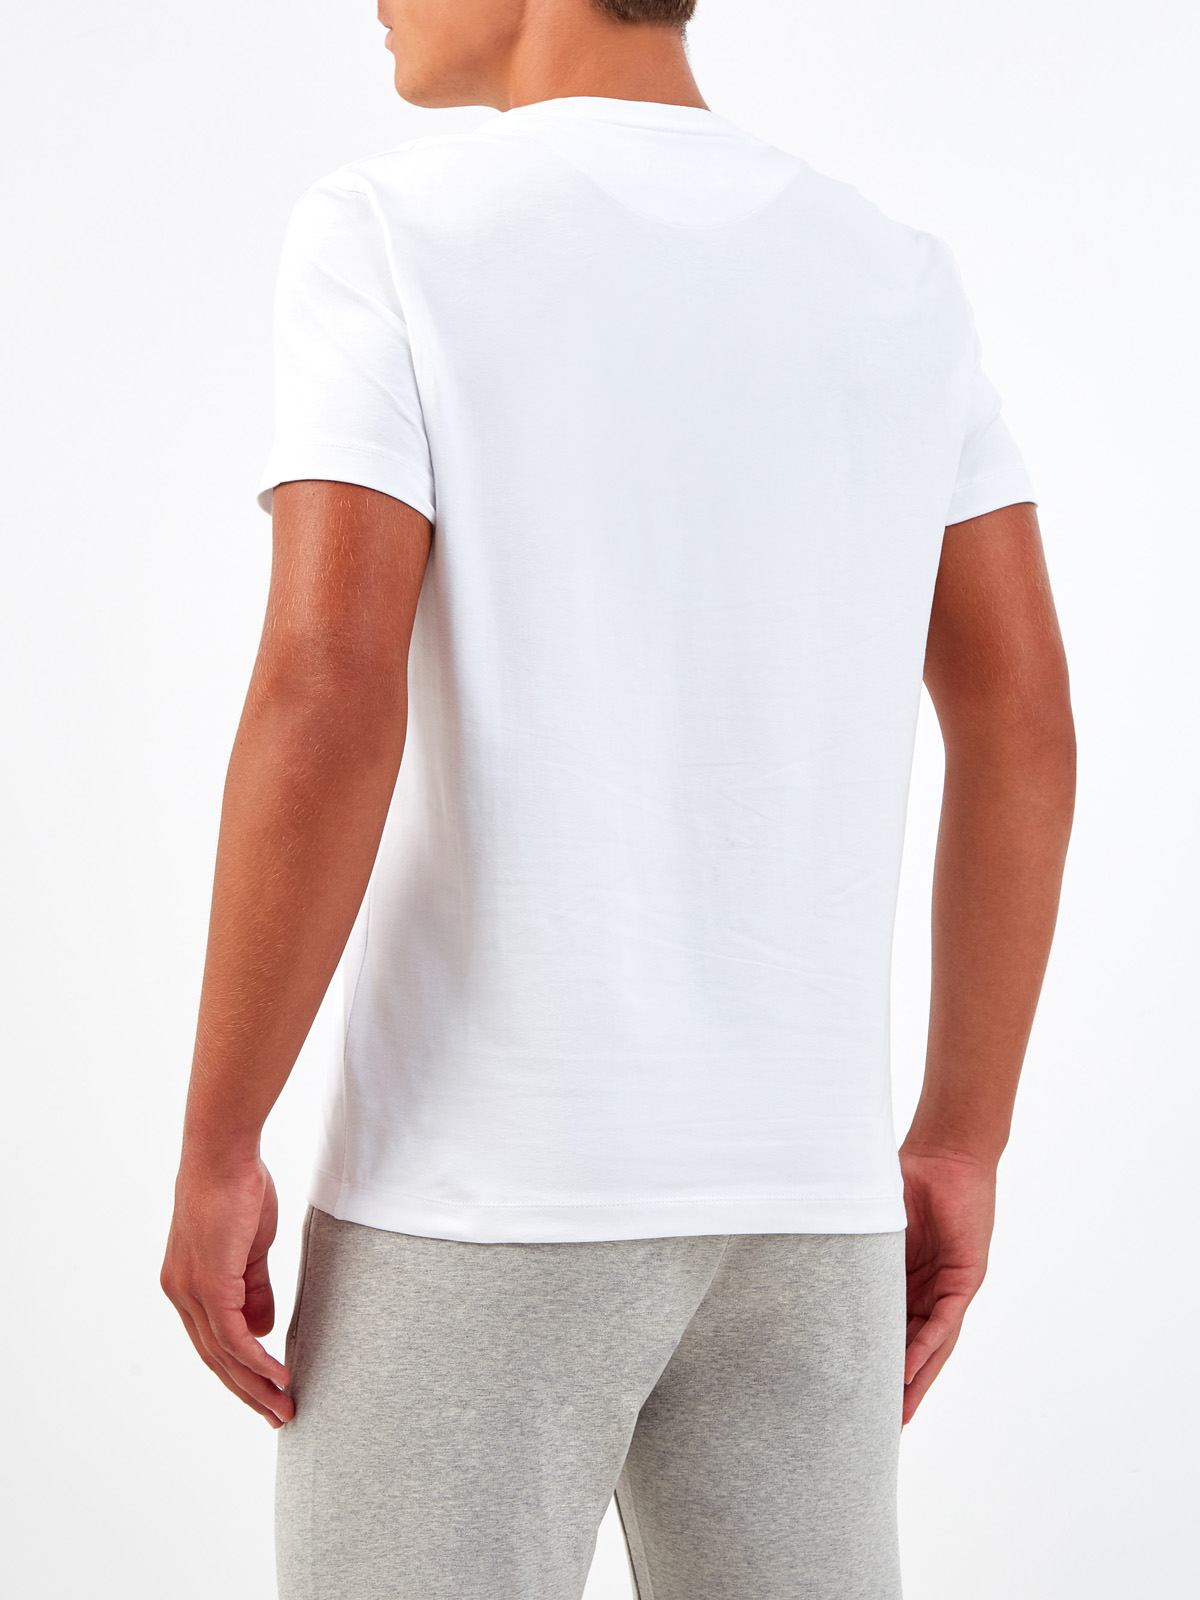 Хлопковая футболка с контрастным принтом Property of BKK BIKKEMBERGS, цвет белый, размер S;L;M - фото 4